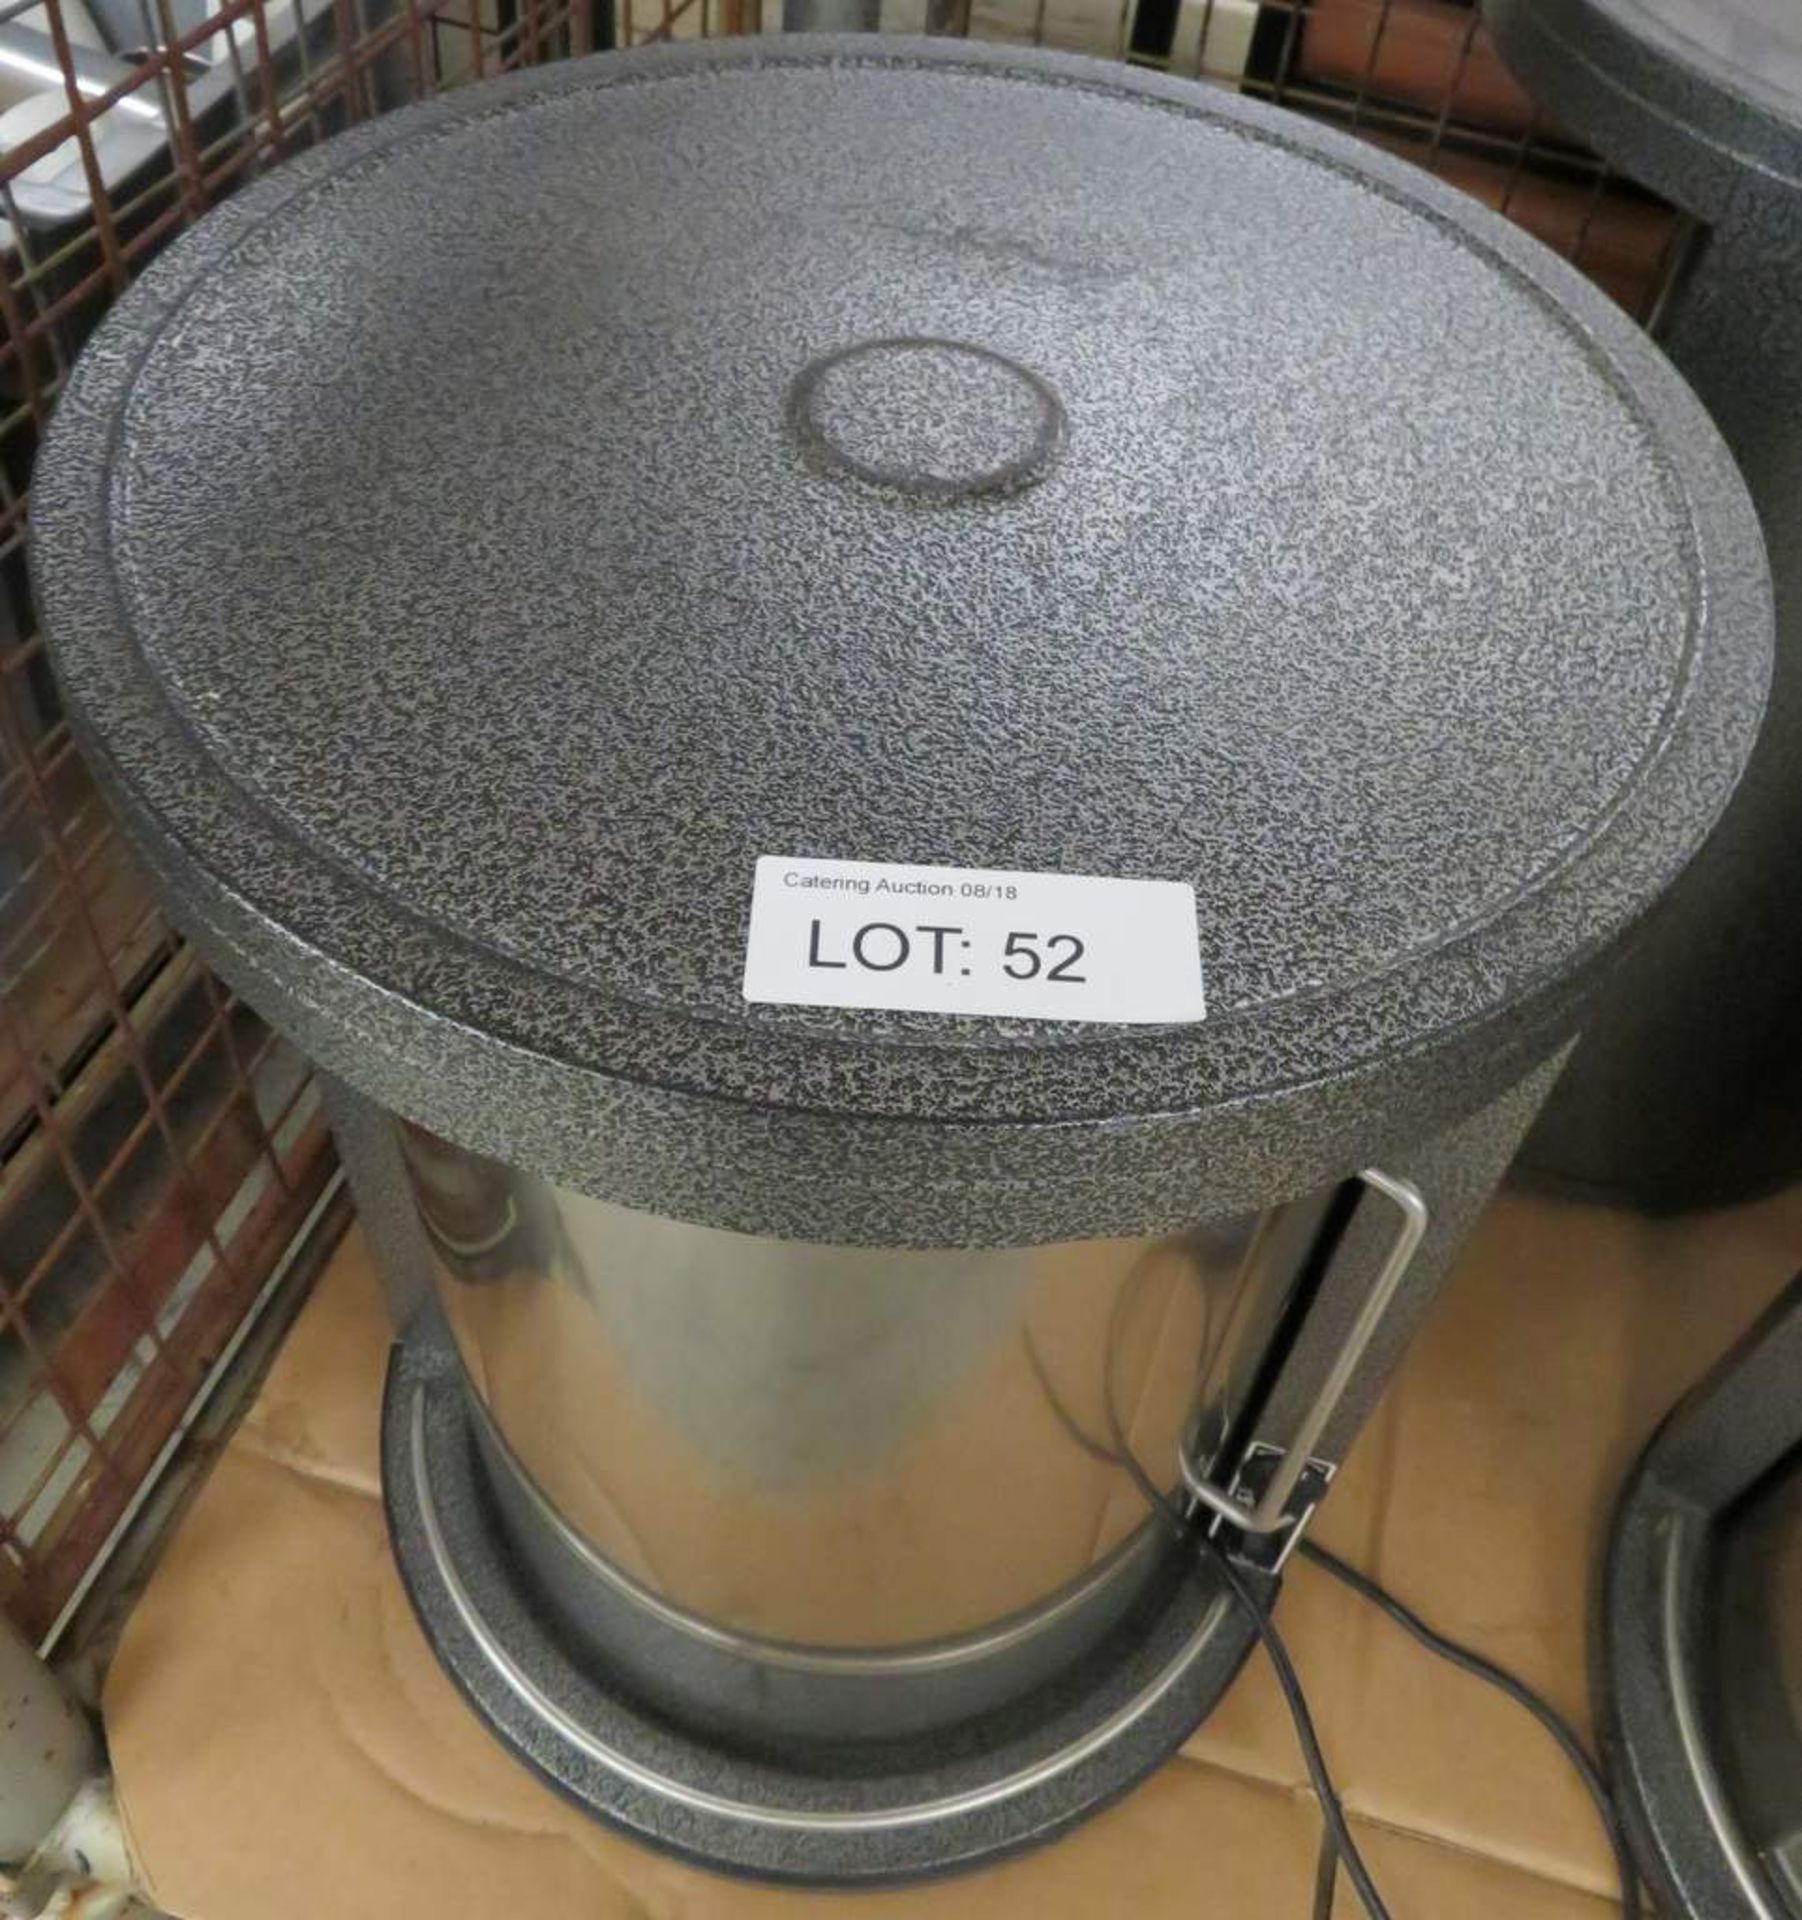 Lockhart Hendi Plate Warmer. Model: HE1275 - Image 2 of 4